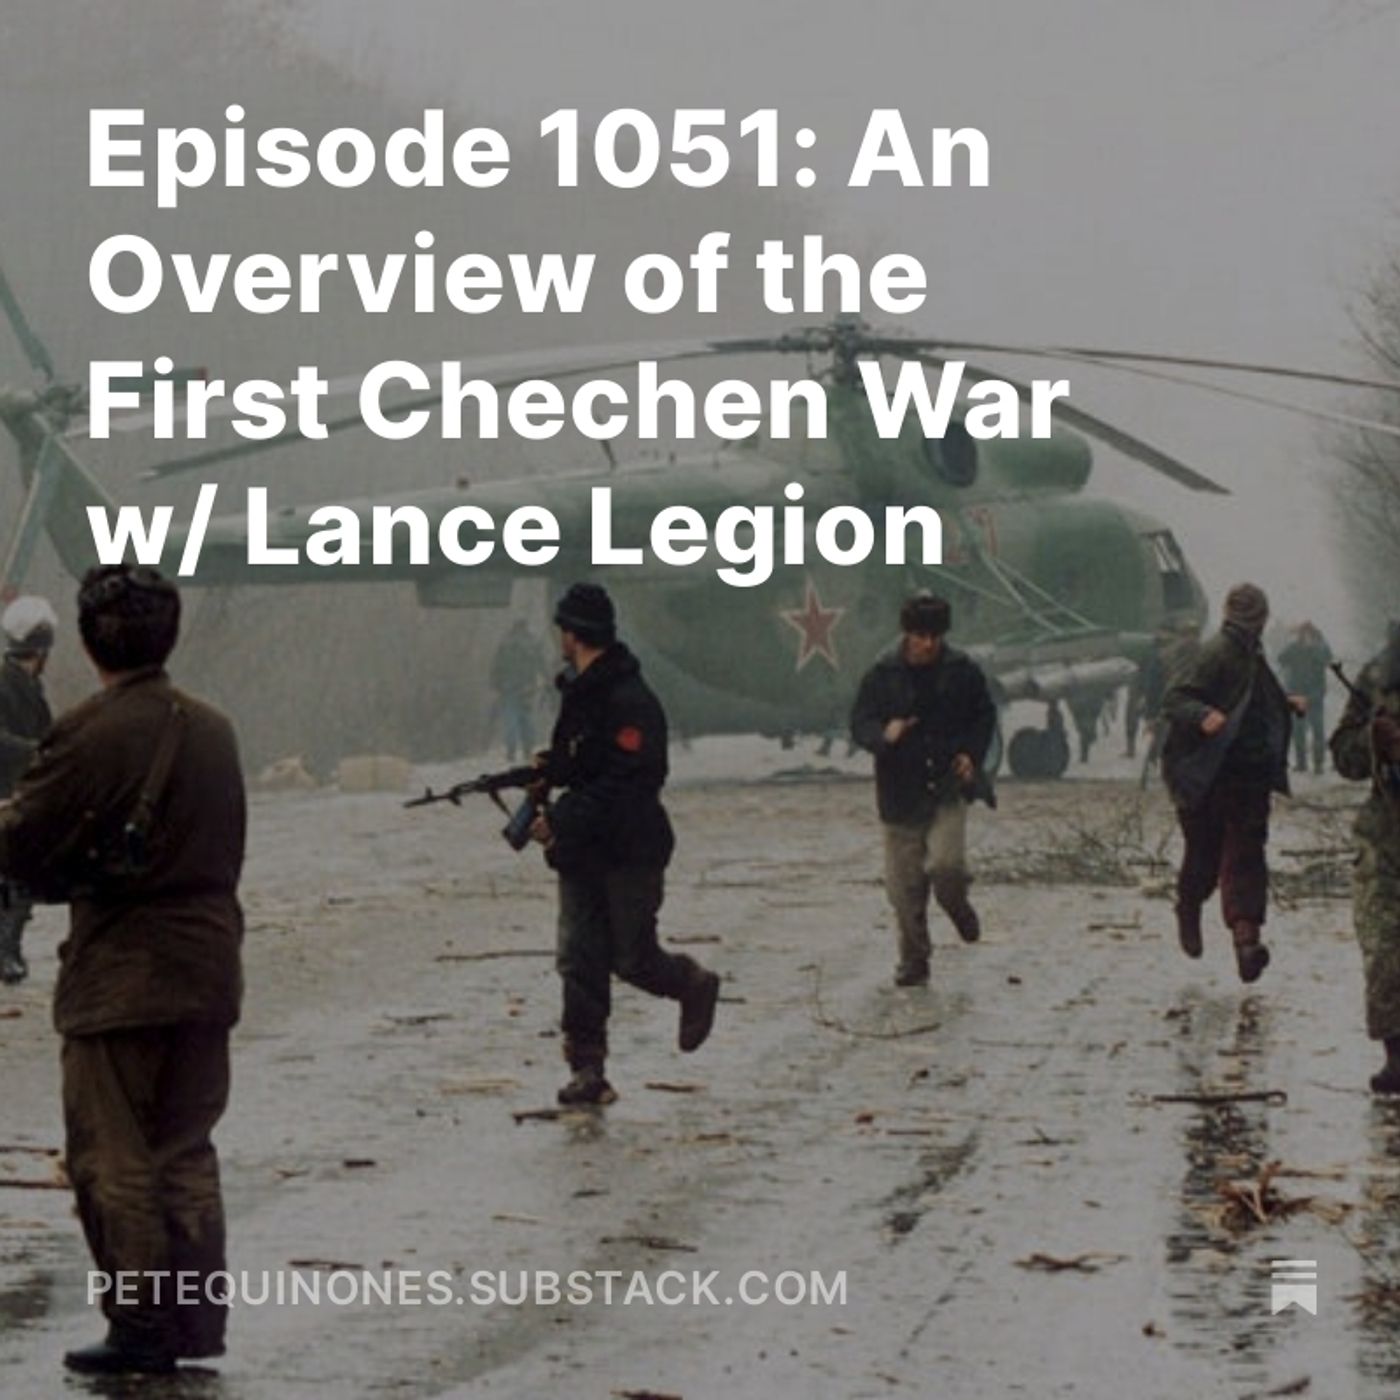 Episode 1051: An Overview of the First Chechen War w/ Lance Legion